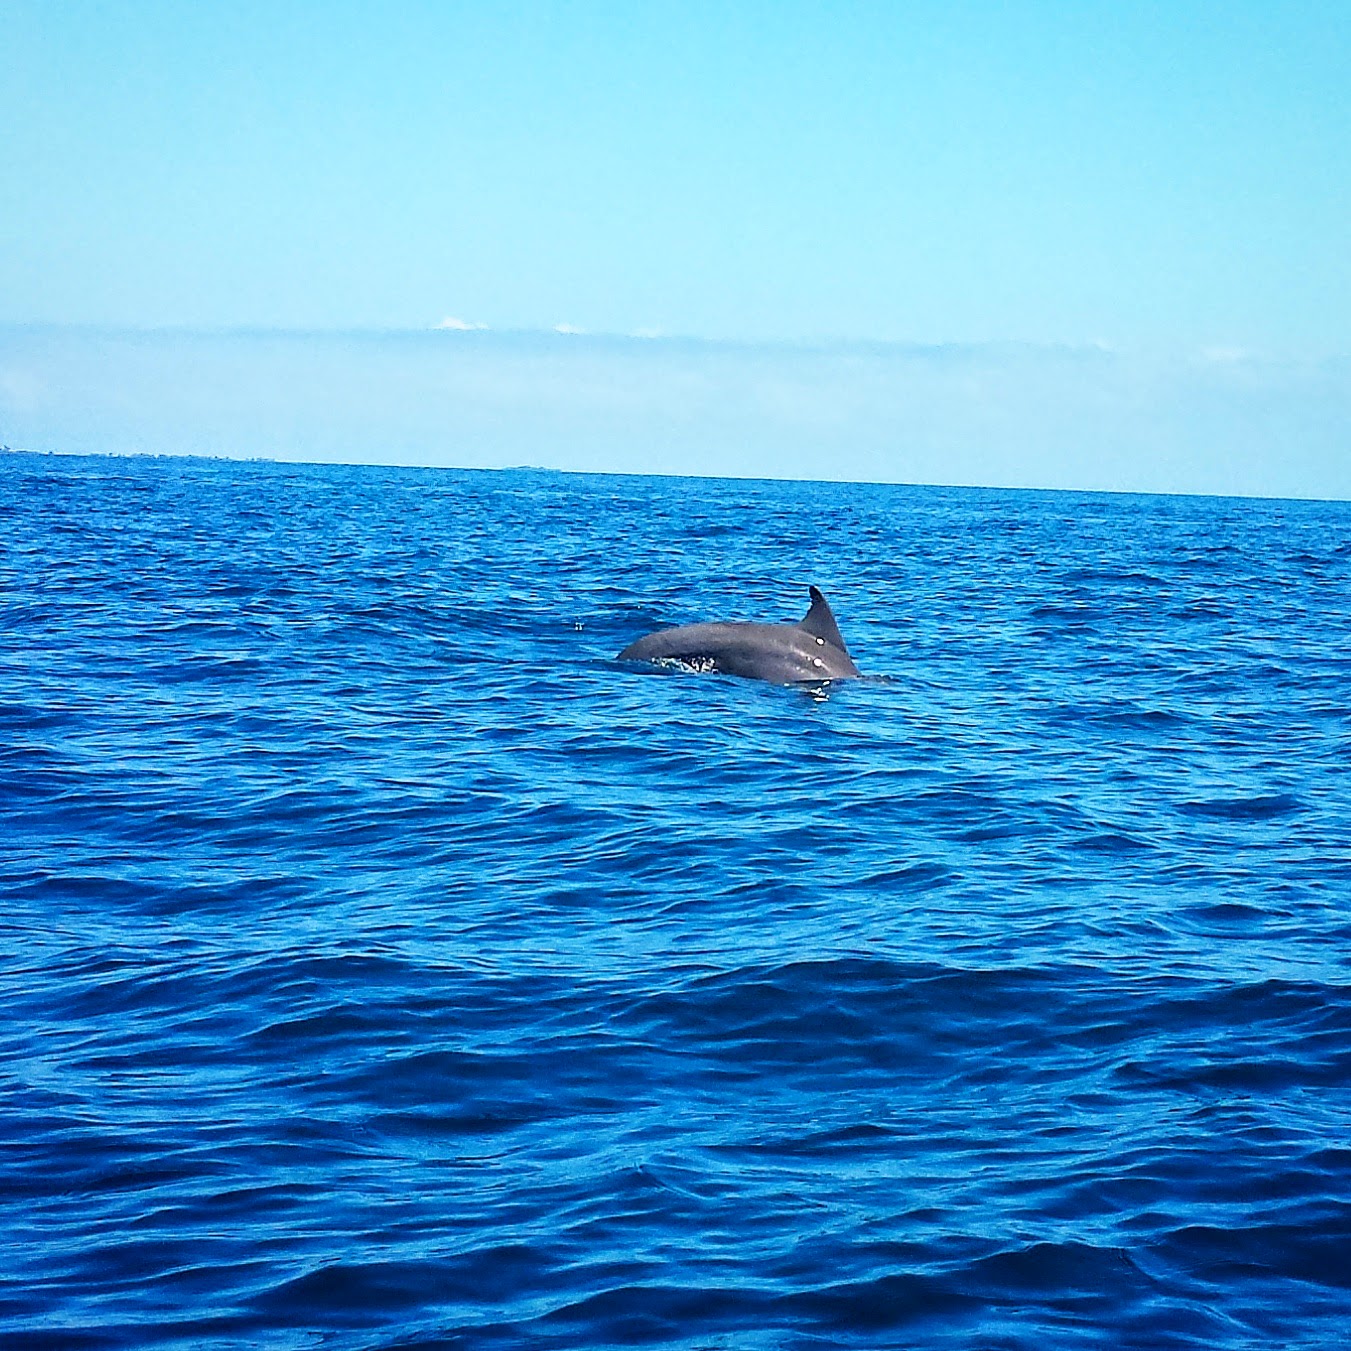 Remax Vip Belize: Dolphins